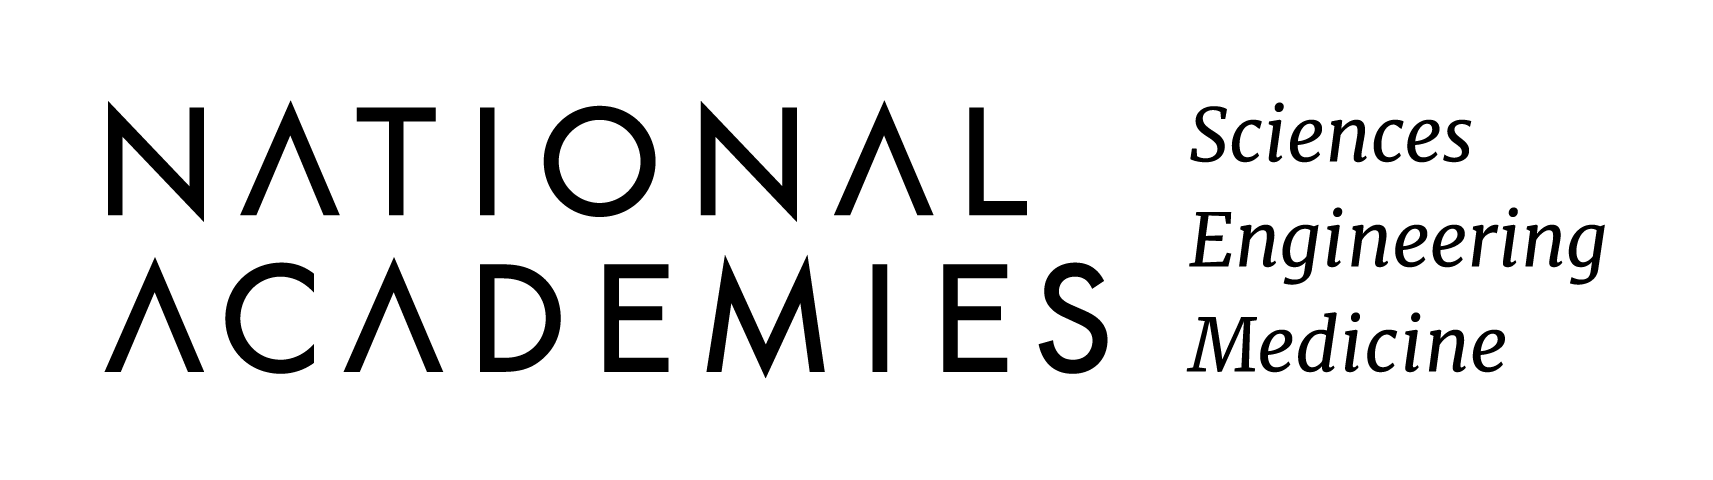 National Academies of Sciences Engineering Medicine Logo